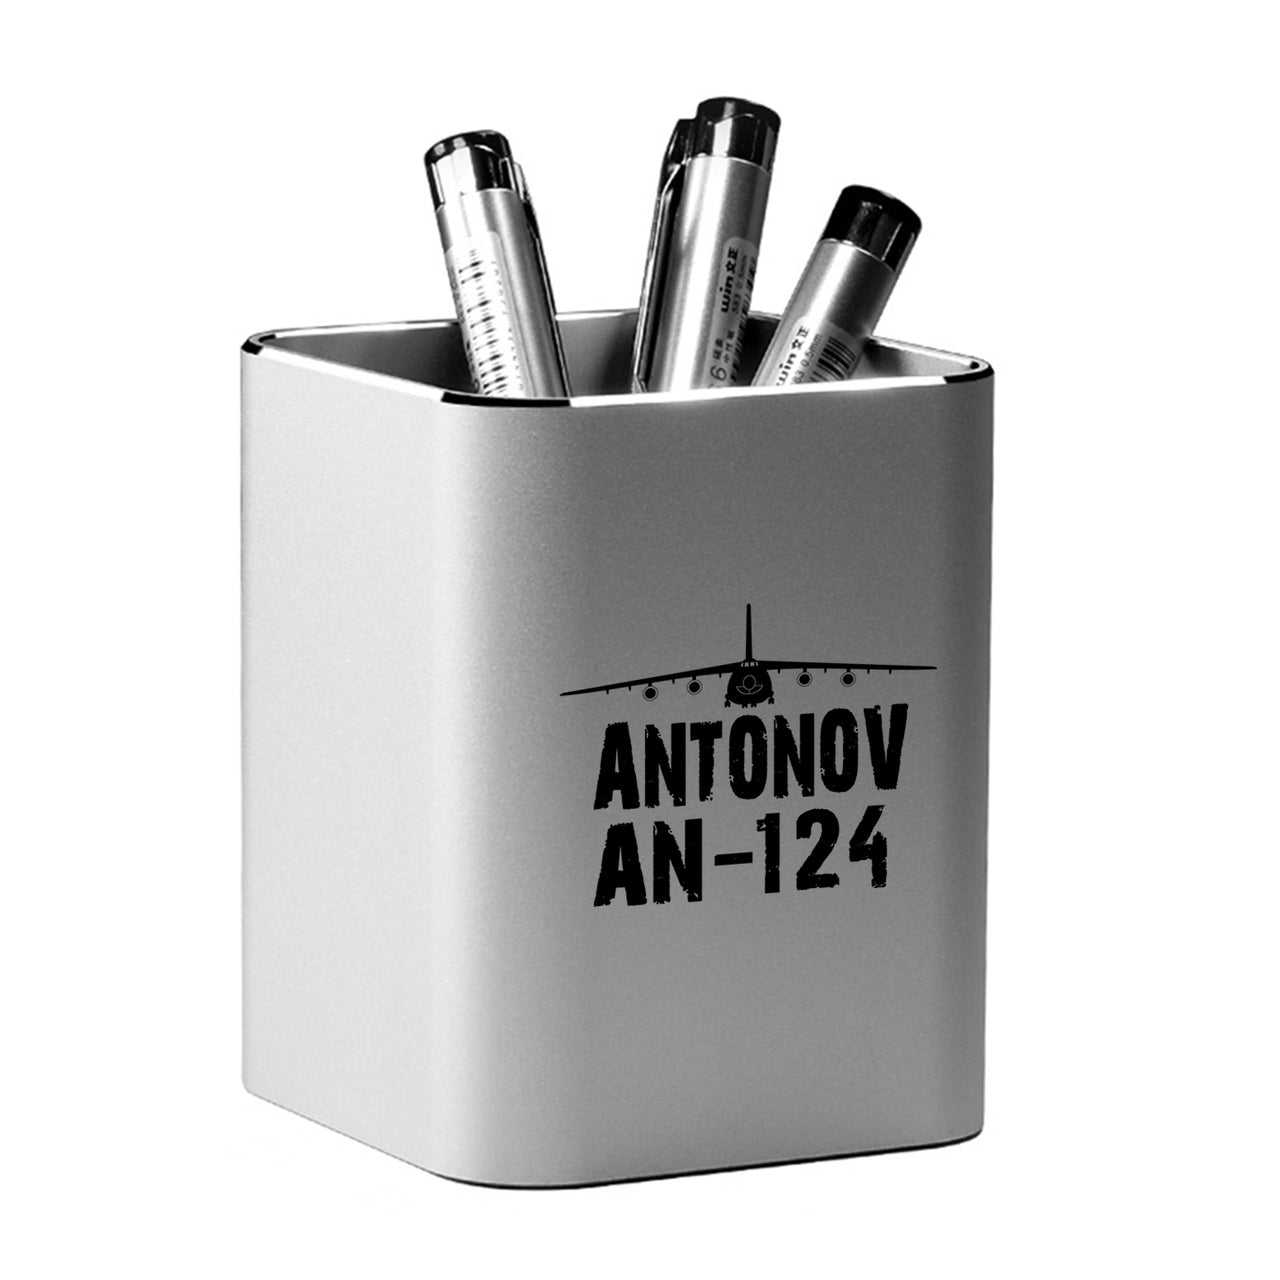 Antonov AN-124 & Plane Designed Aluminium Alloy Pen Holders